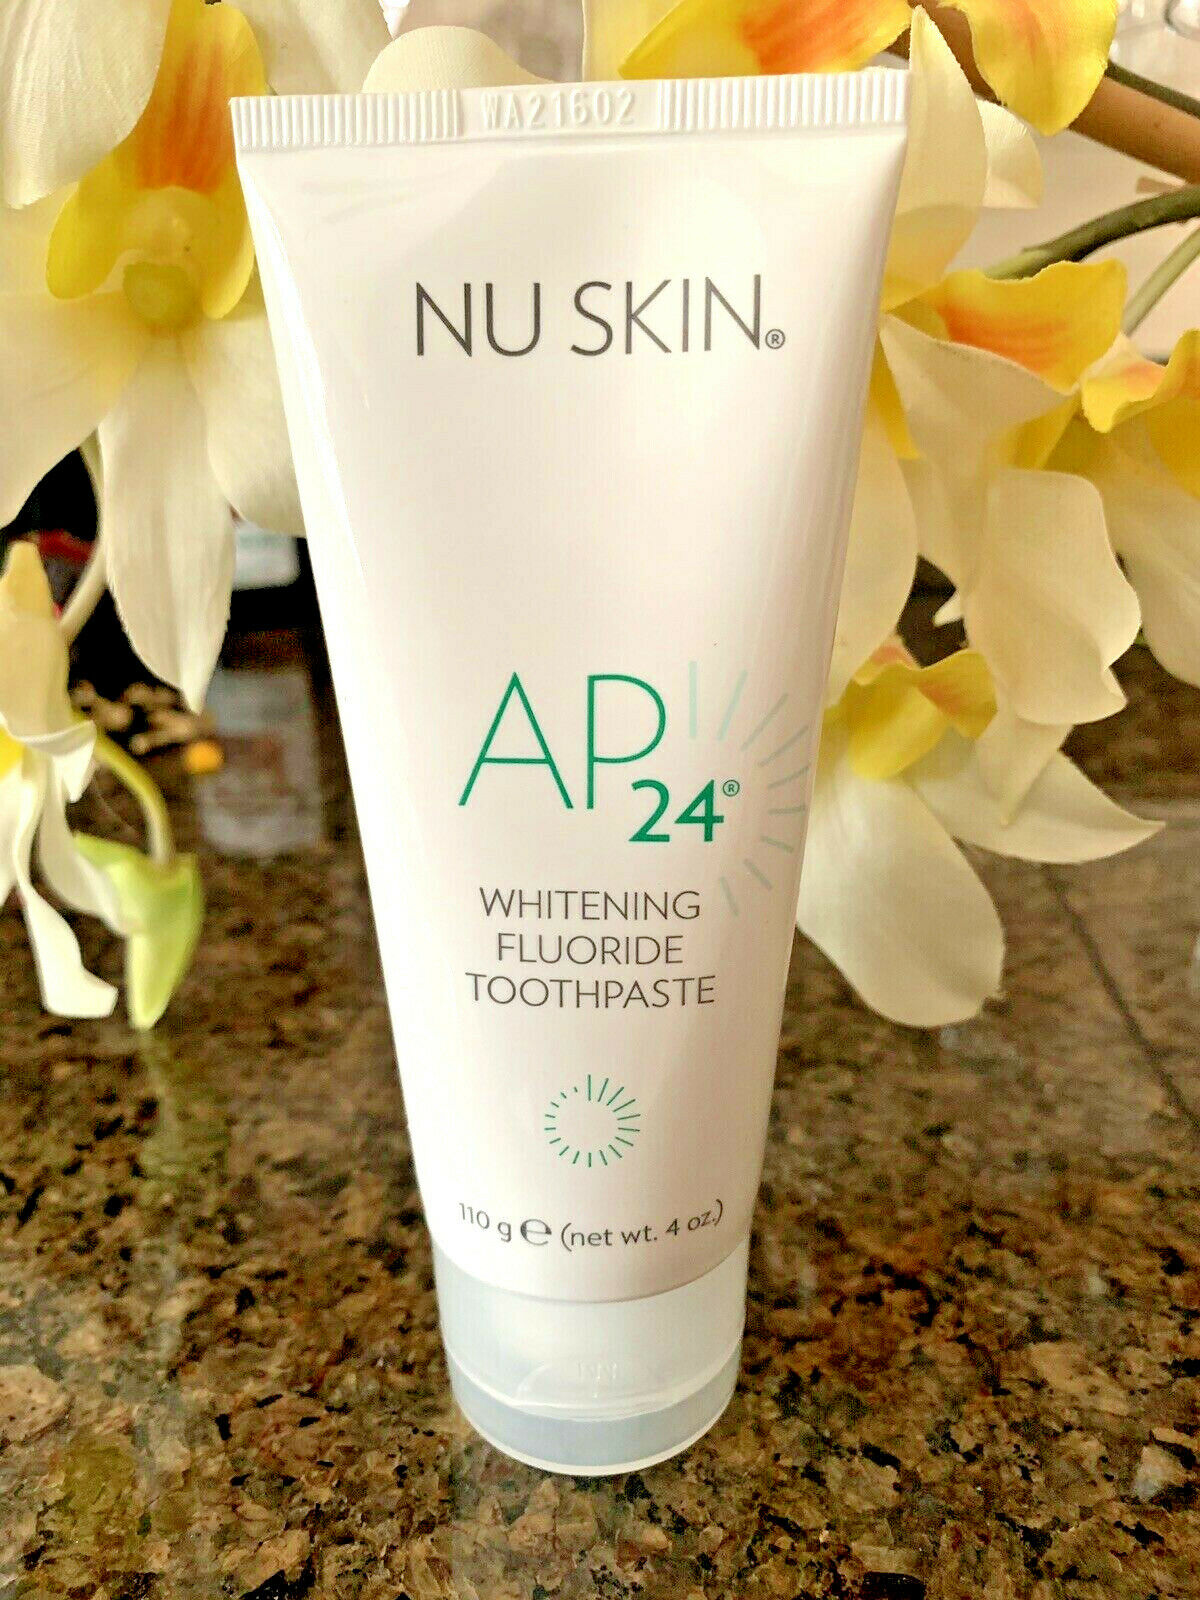 Nu Skin Nuskin Ap-24 Whitening Fluoride Toothpaste 4.0oz - Exp 02/2023